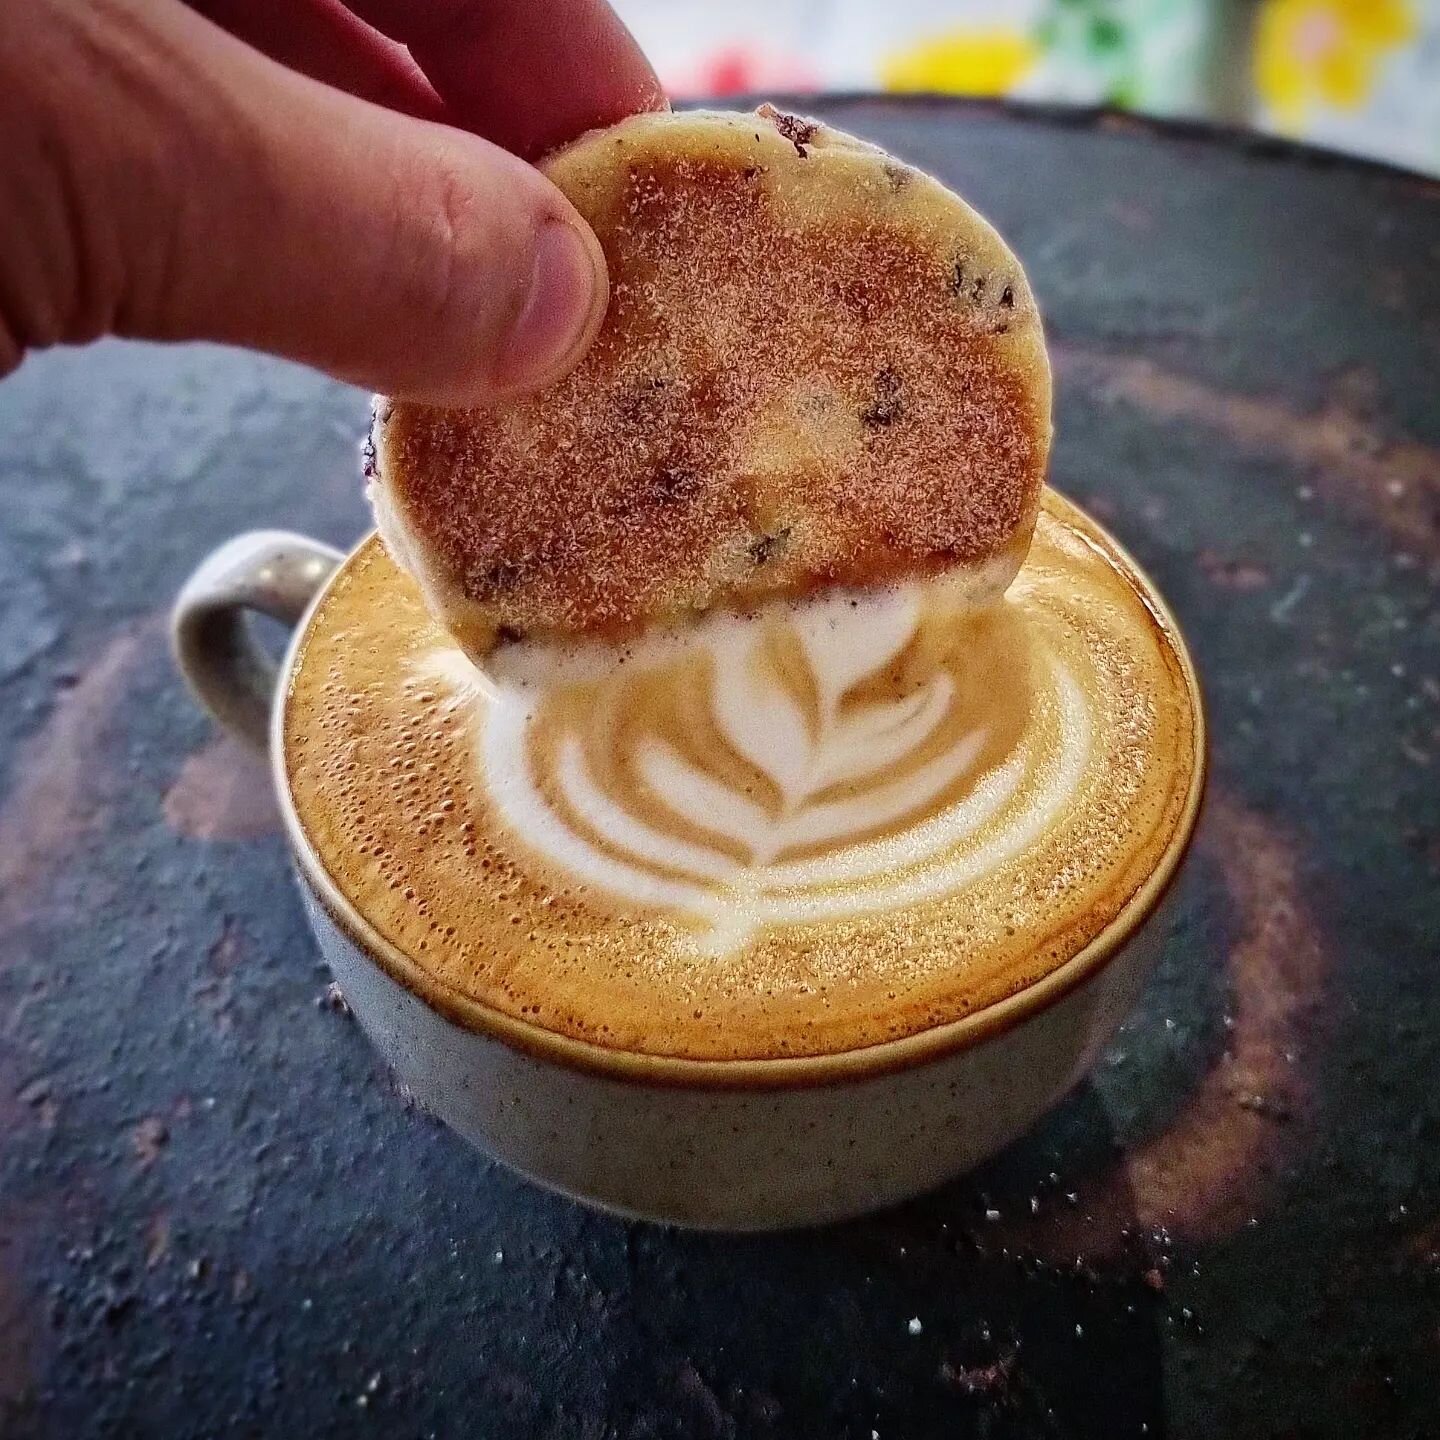 How do you like your welshcakes in the morning? 
.
#elephantandbun #elephantandbundeli #deli #takeaway #welshcakes #takeawaycoffee #coffee #latte #latteart  #flatwhite #frenchdip